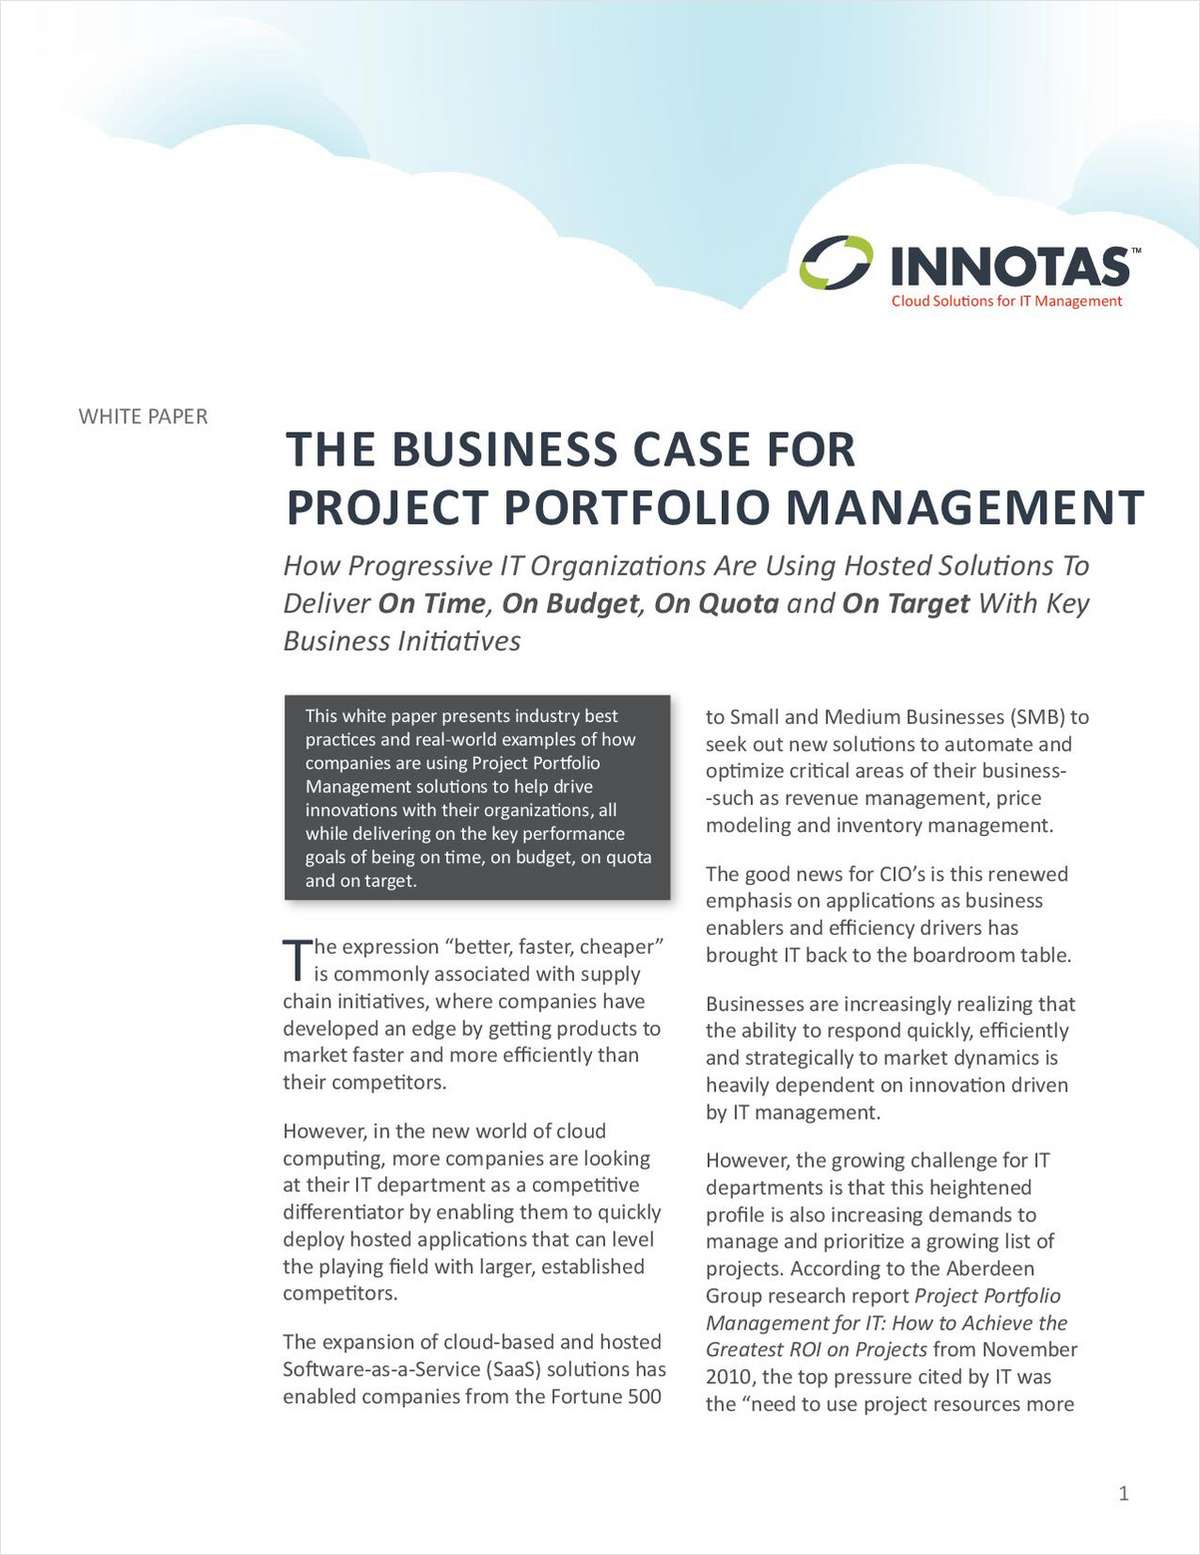 The Business Case for Project Portfolio Management